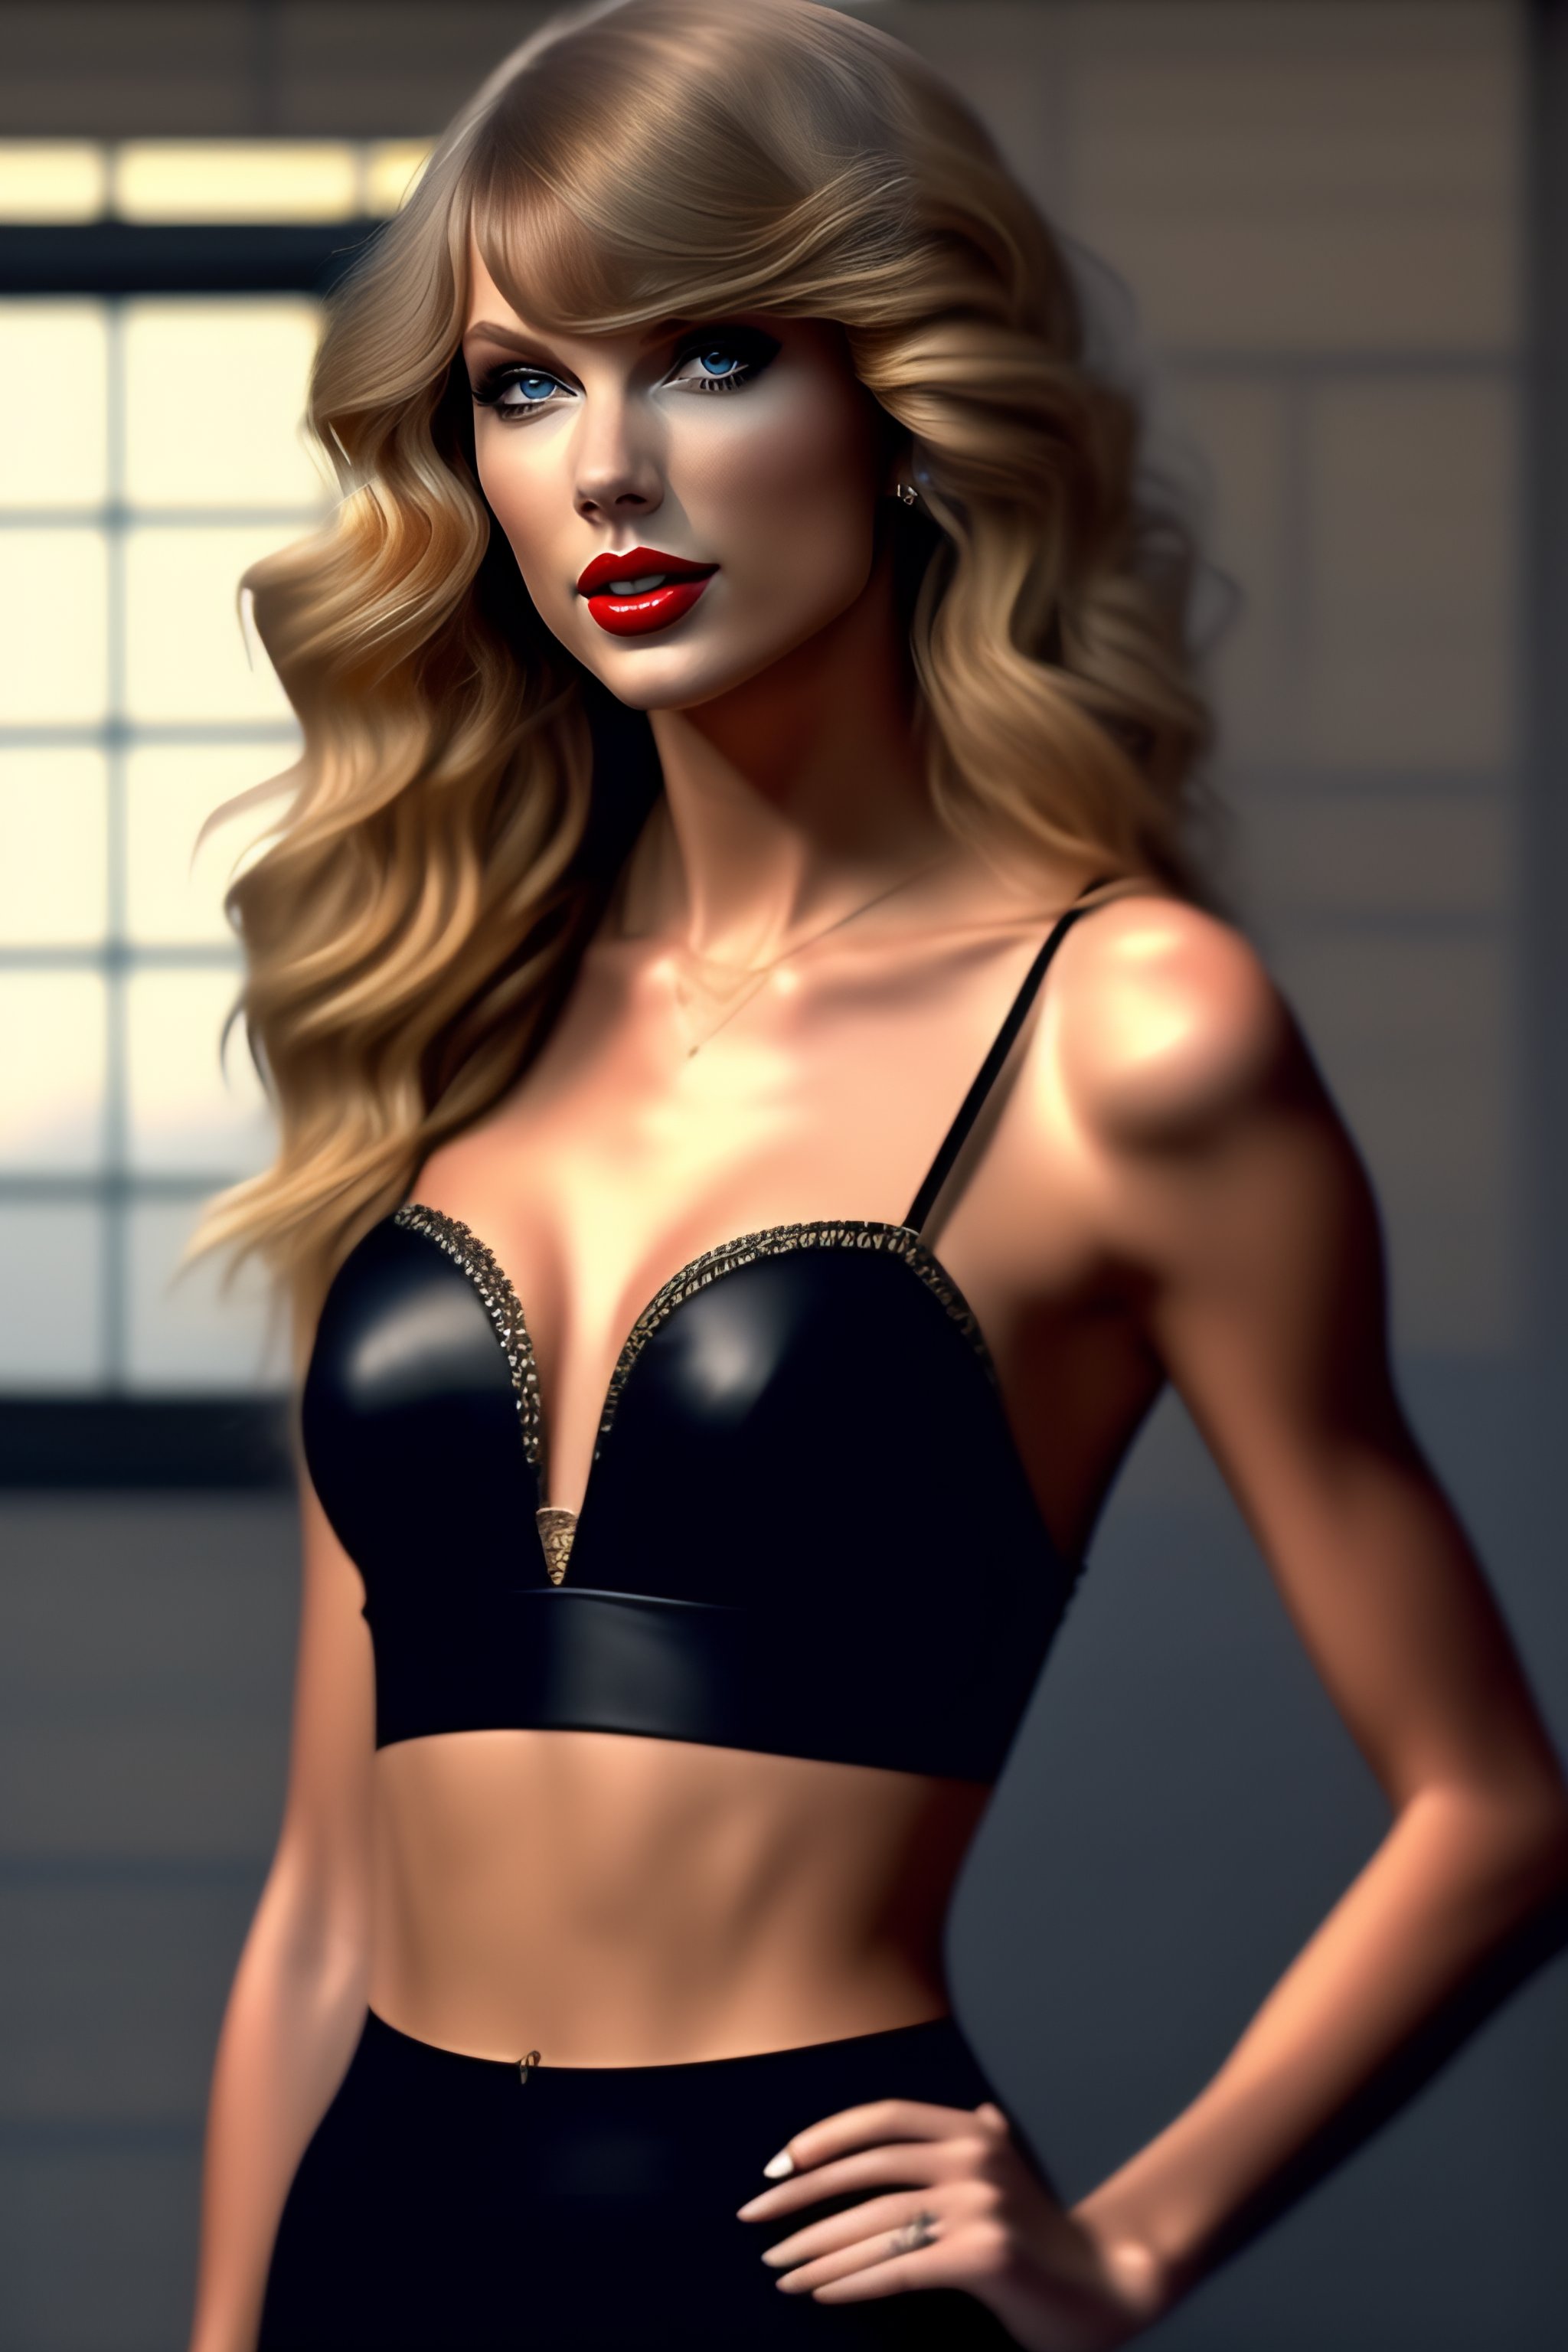 Lexica - Taylor swift, full body view, wearing in black bra, very